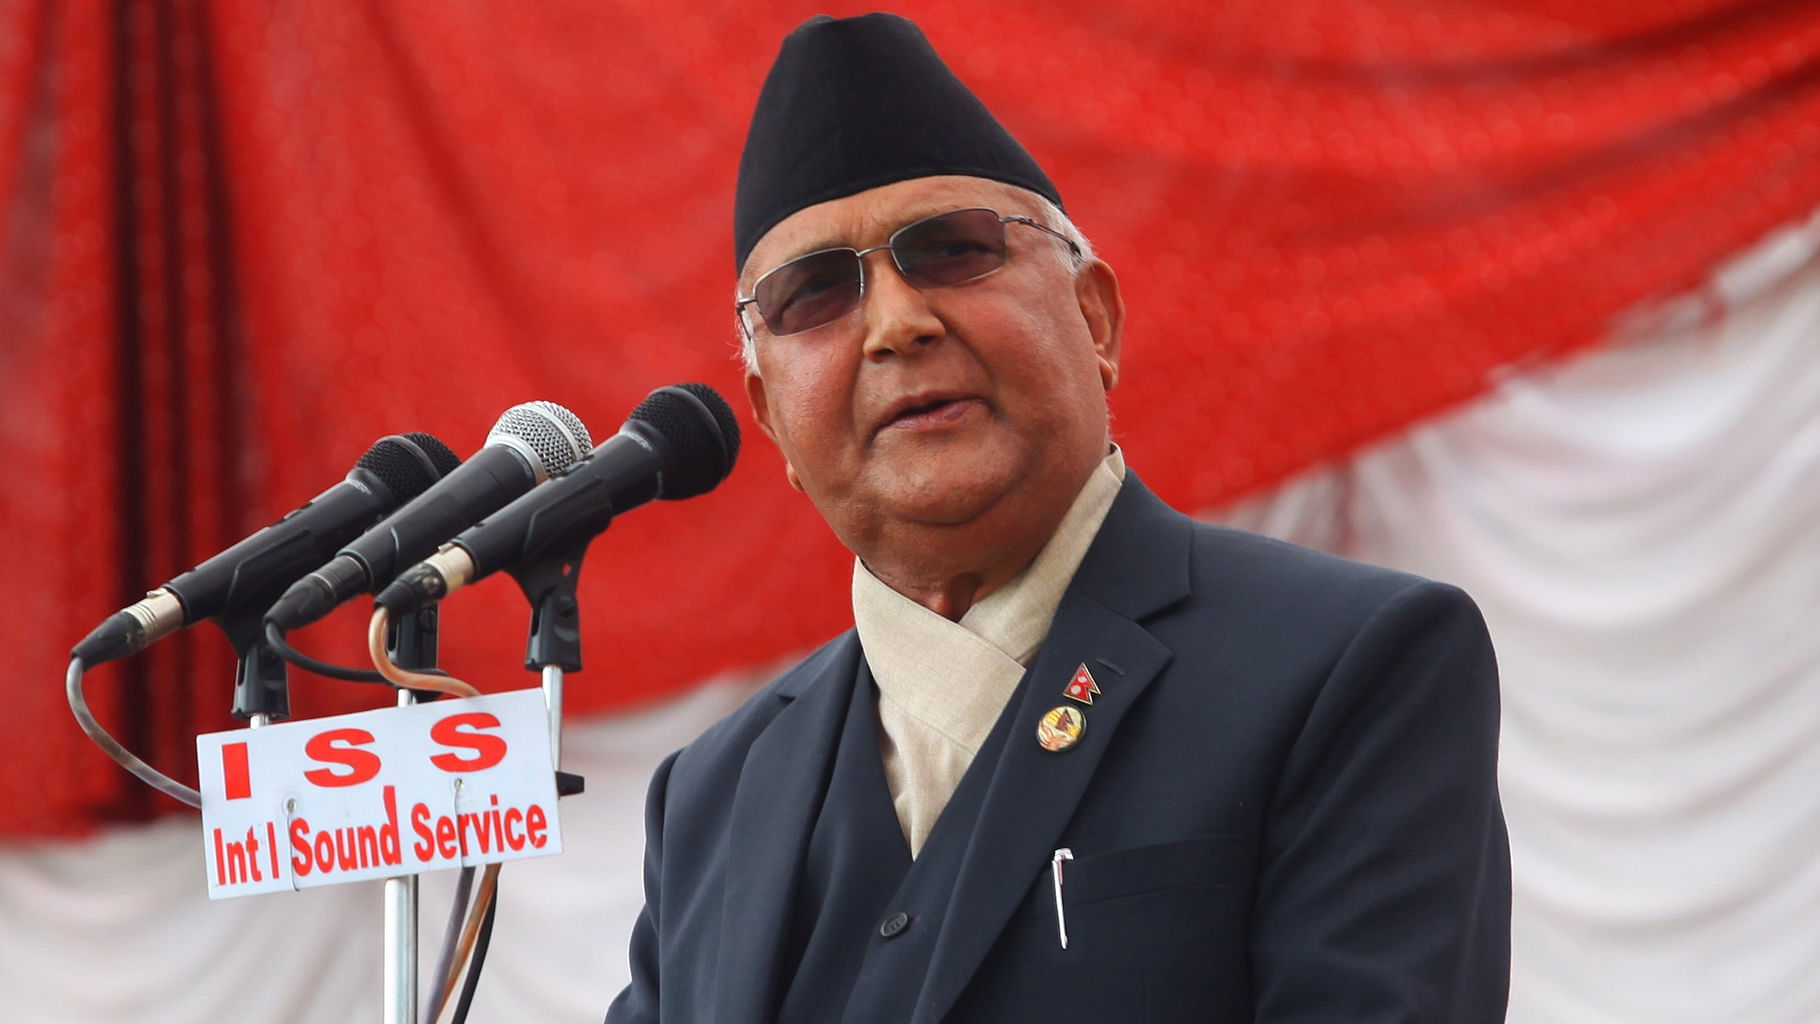 Nepal’s Prime Minister KP Oli. (Photo: IANS)